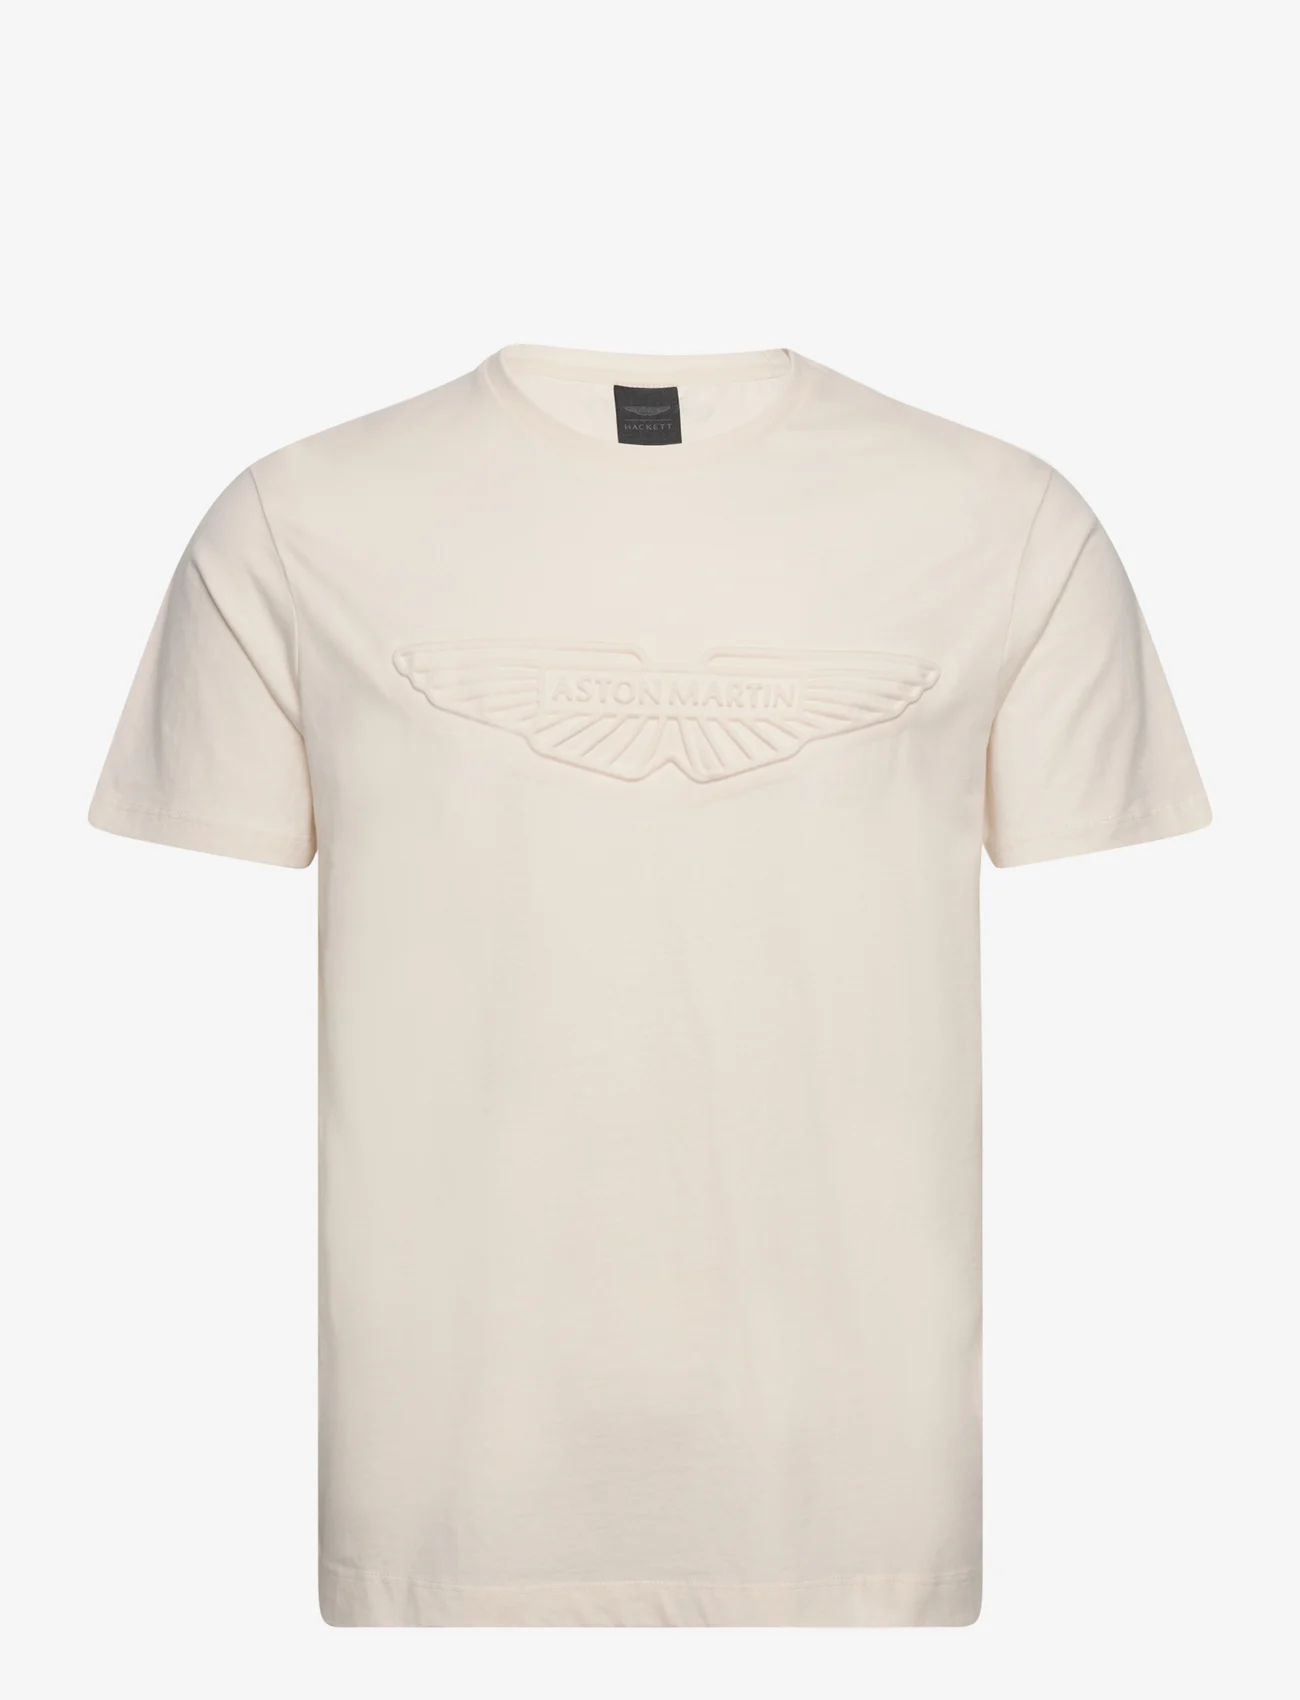 Hackett London - AM EMBOSS TEE - kortærmede t-shirts - ecru white - 0